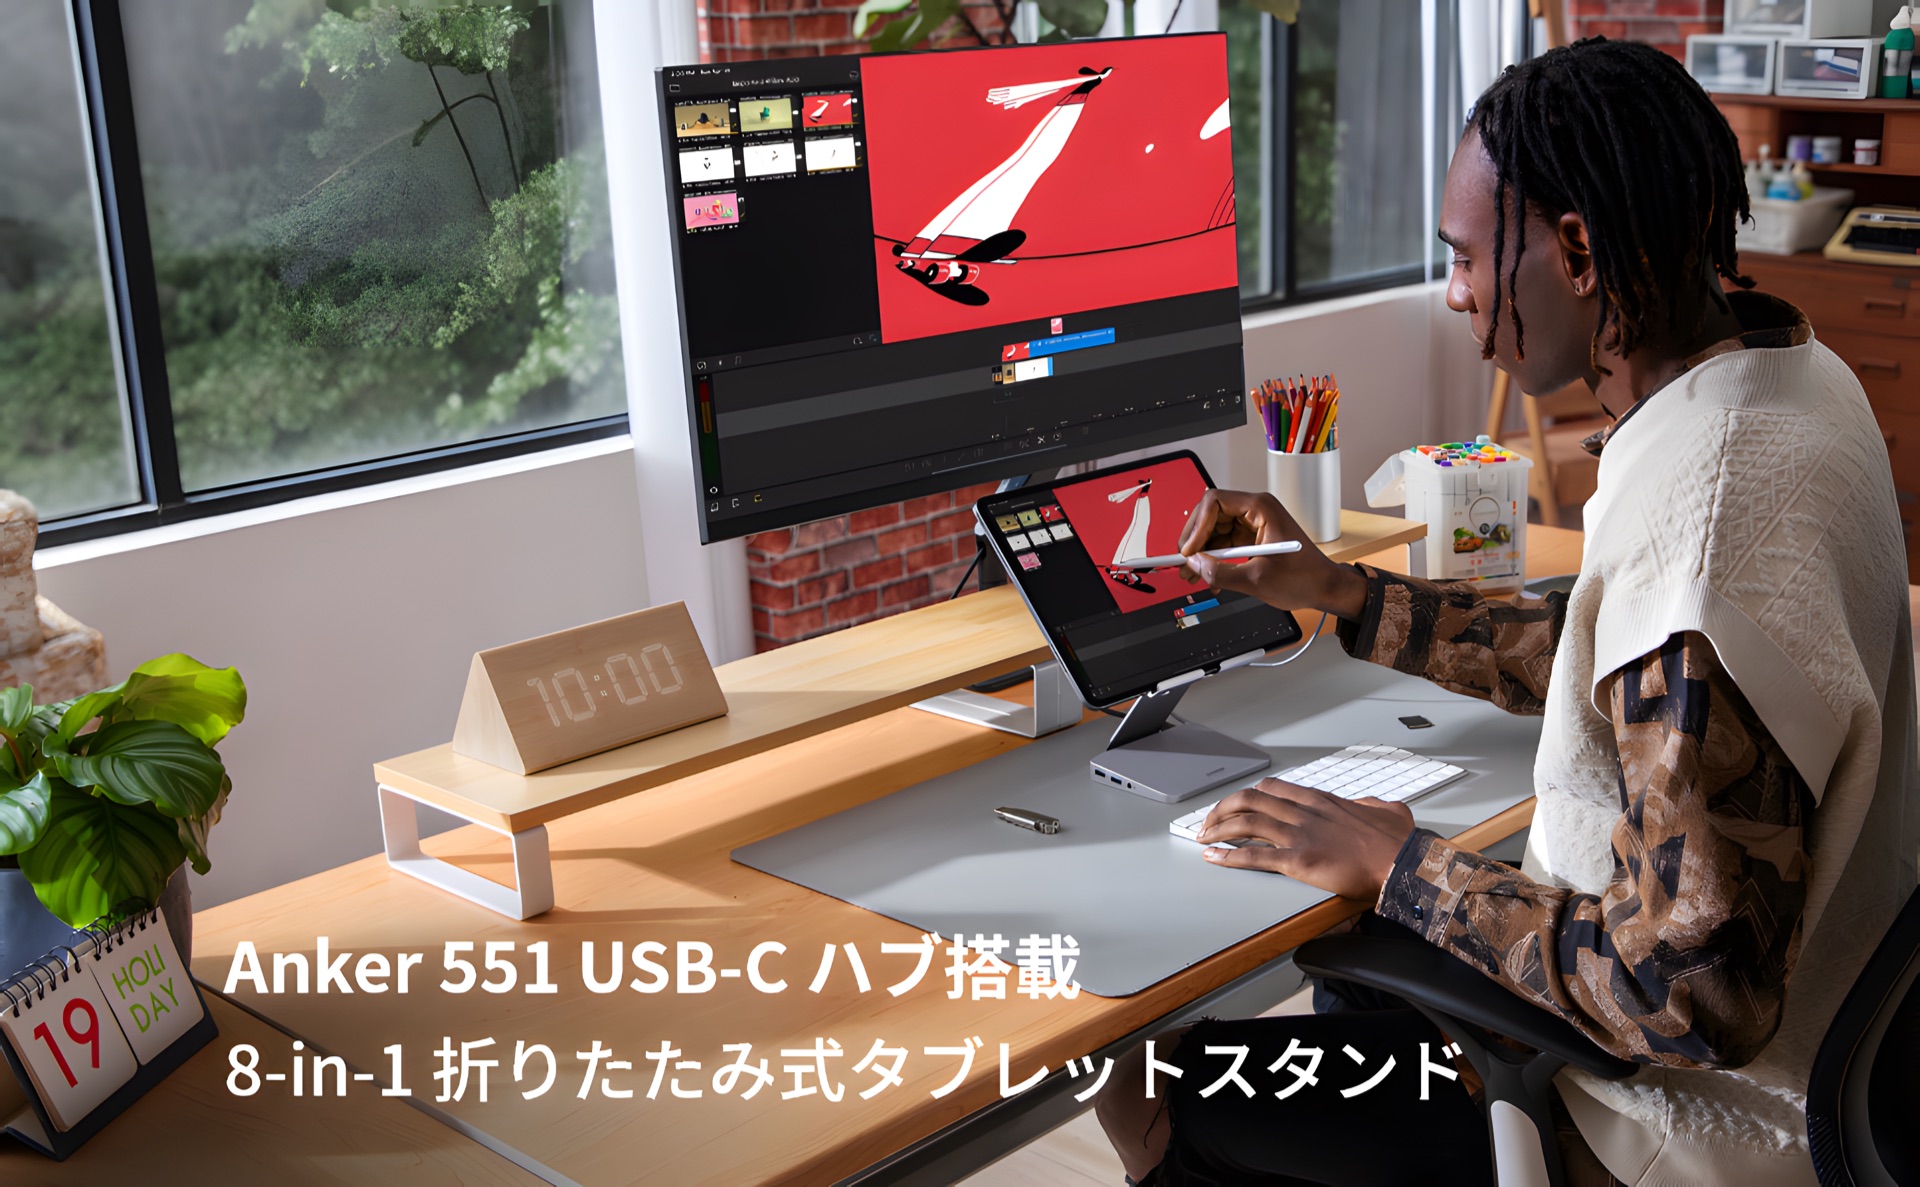 Anker 551 USB-C ハブ搭載 8-in-1 折りたたみ式タブレットスタンド